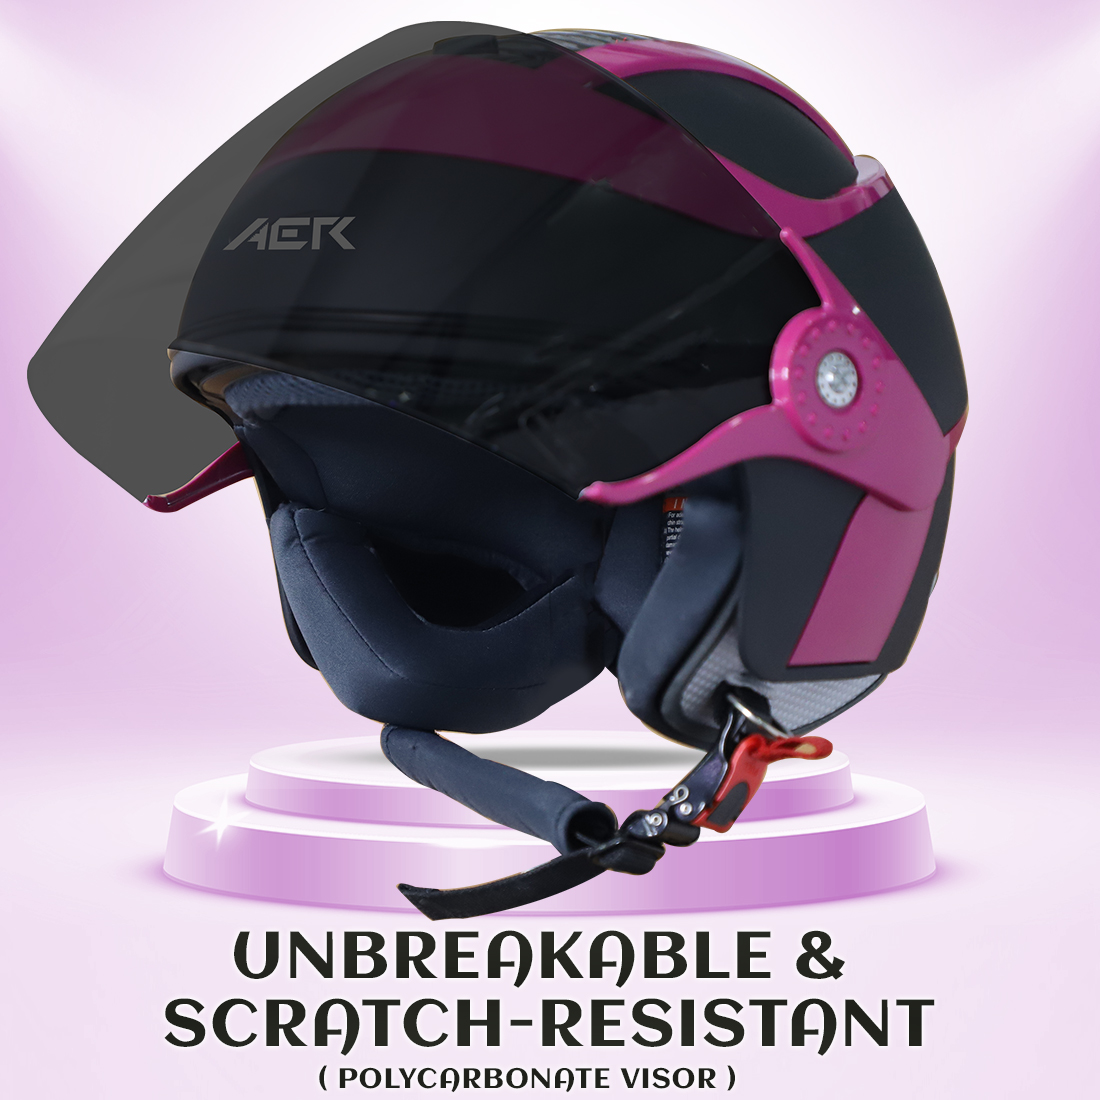 Steelbird SB-29 AER ISI Certified Helmet For Men And Women (Matt Black Pink With Smoke Visor)